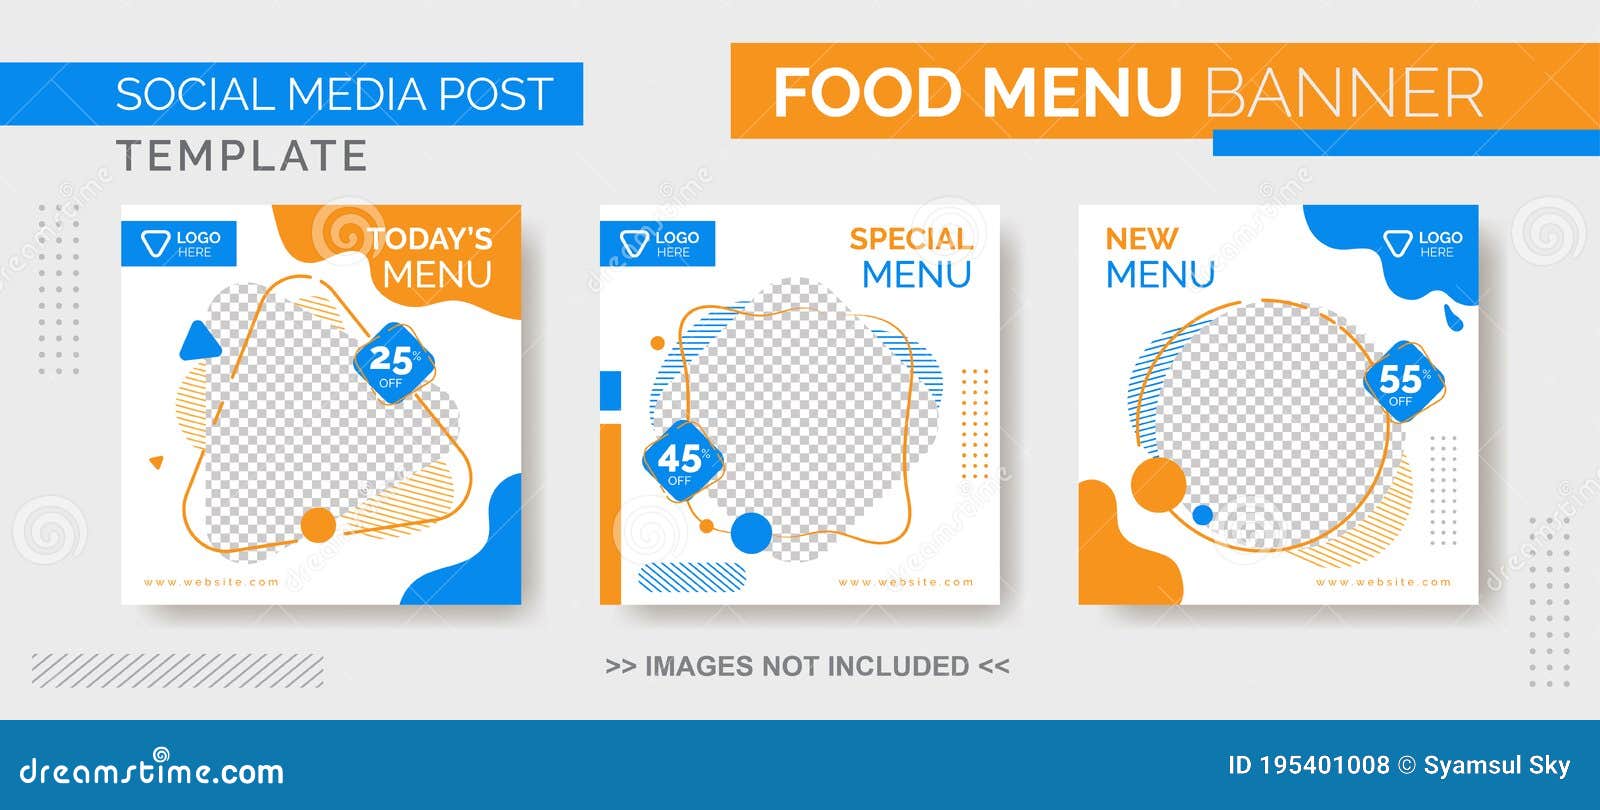 food menu banner template, social media  food tamplate, instagram post food template with blue and orange color